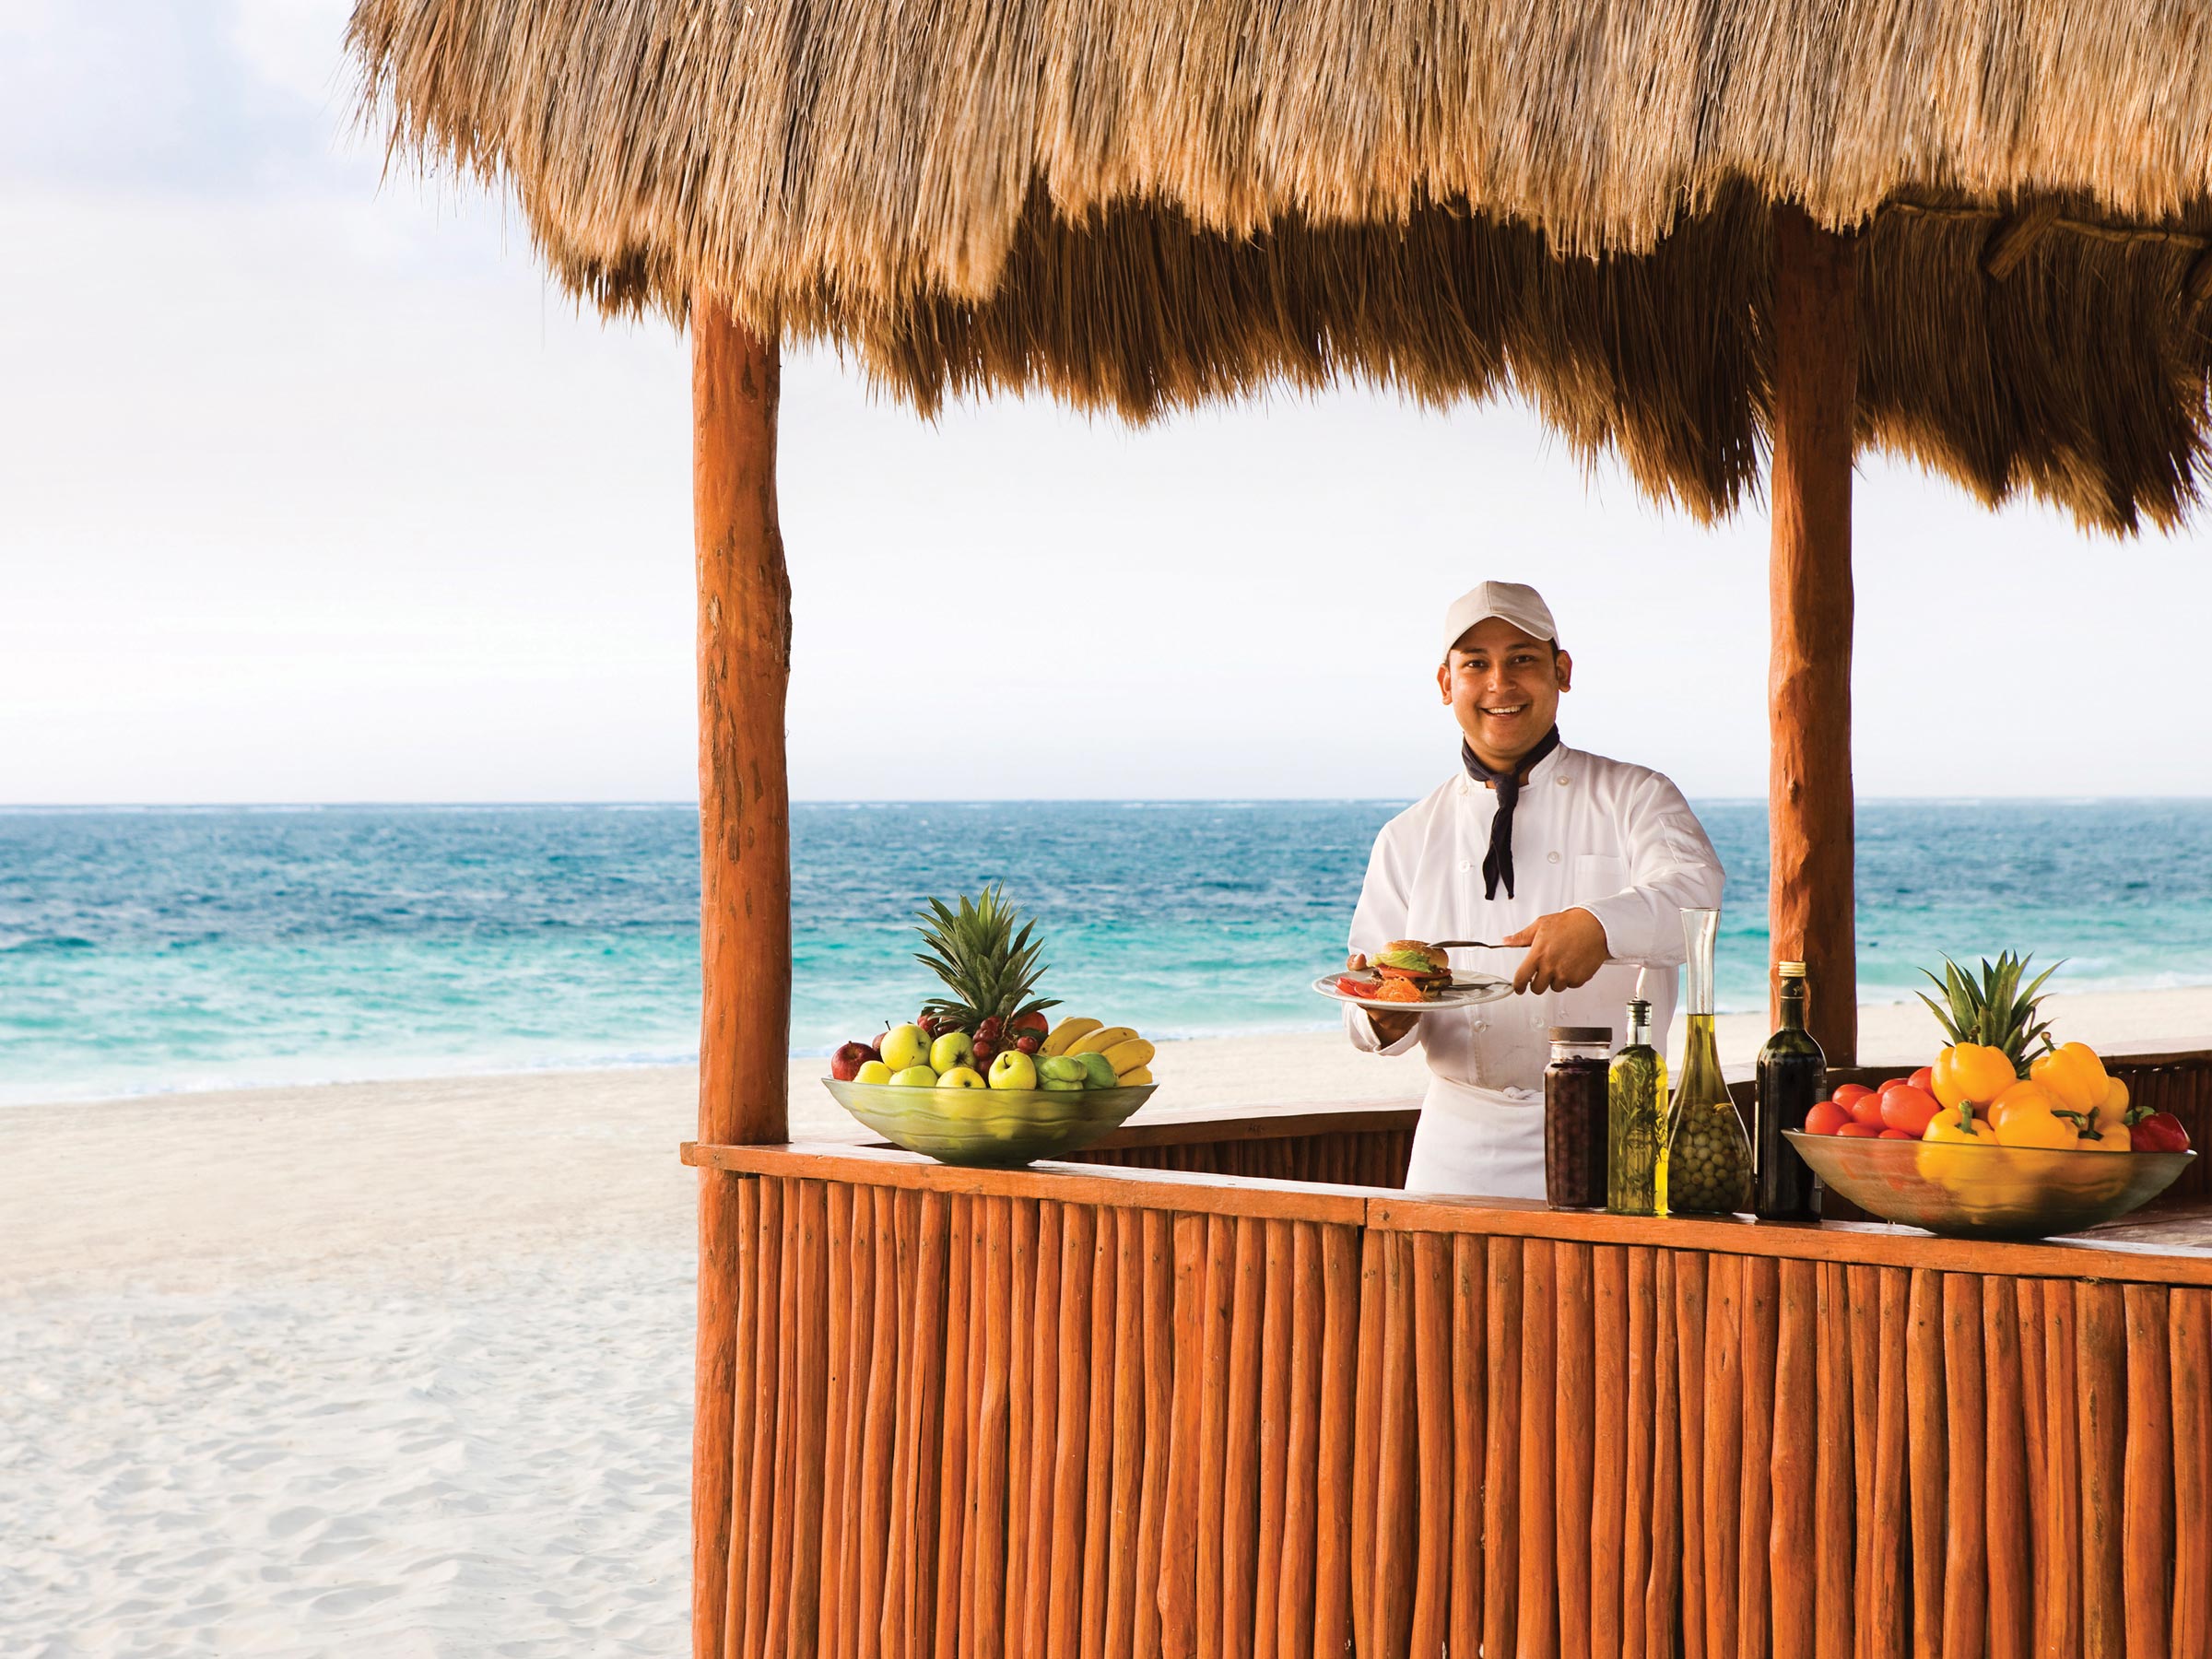 Resort Beach Waiter Service